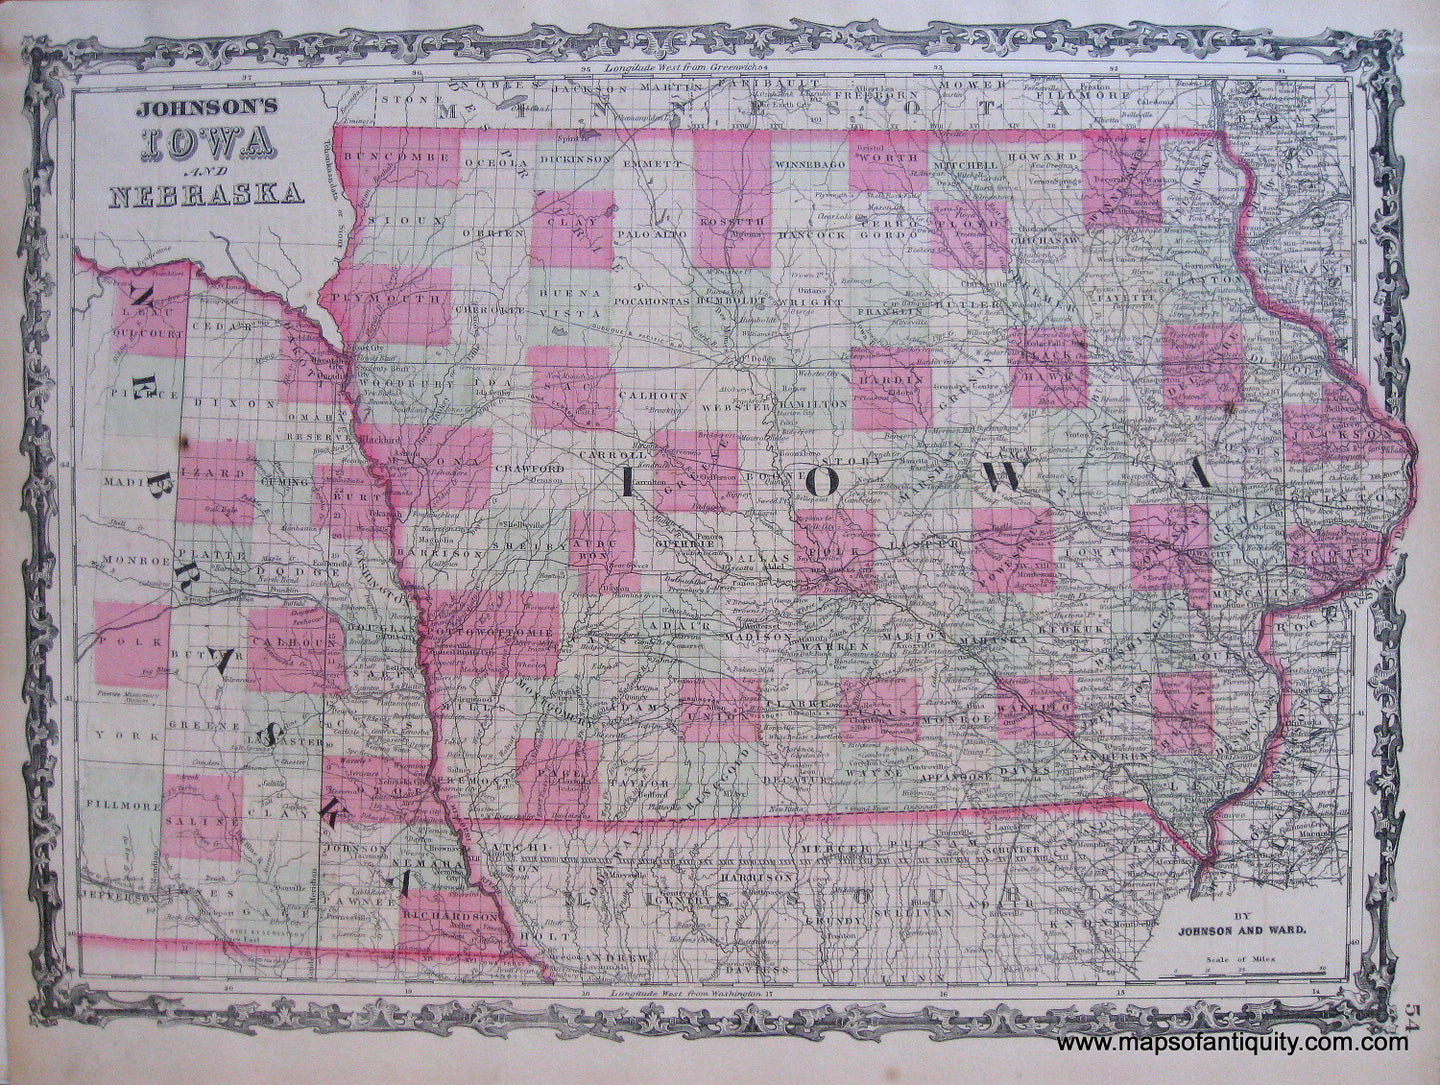 Antique-Hand-Colored-Map-Johnson's-Iowa-and-Nebraska-United-States-Iowa-1864-Johnson-and-Ward-Maps-Of-Antiquity